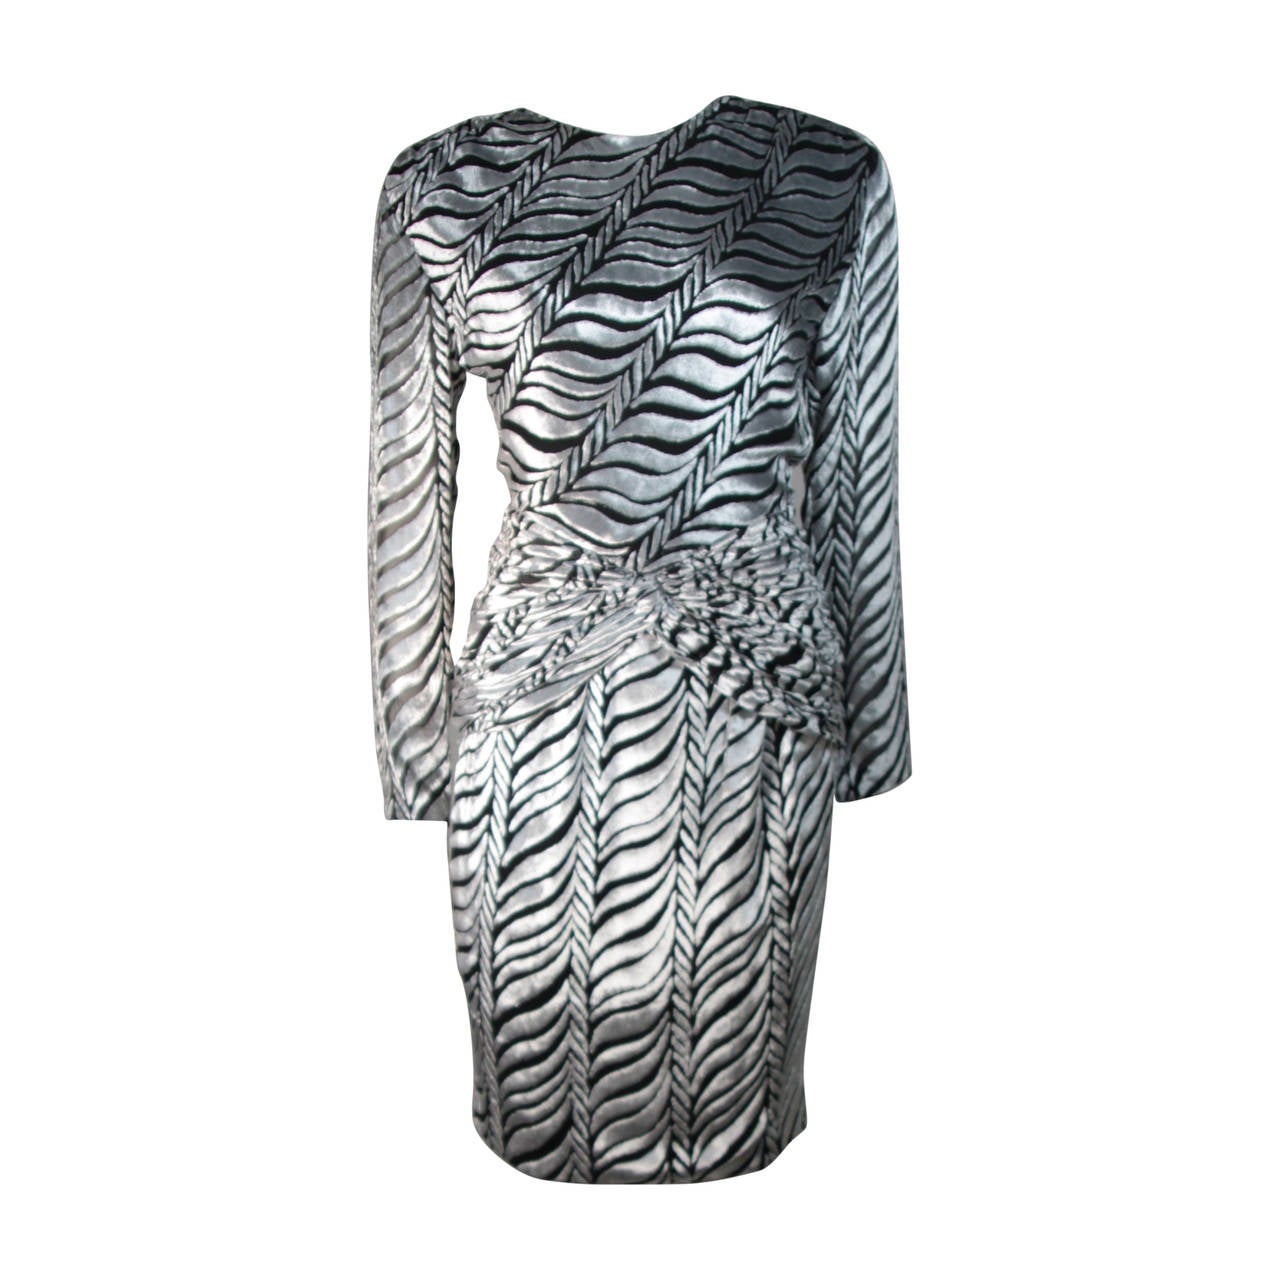 Vicky Tiel Black and Silver Burnout Striped Velvet Cocktail Dress Size Small